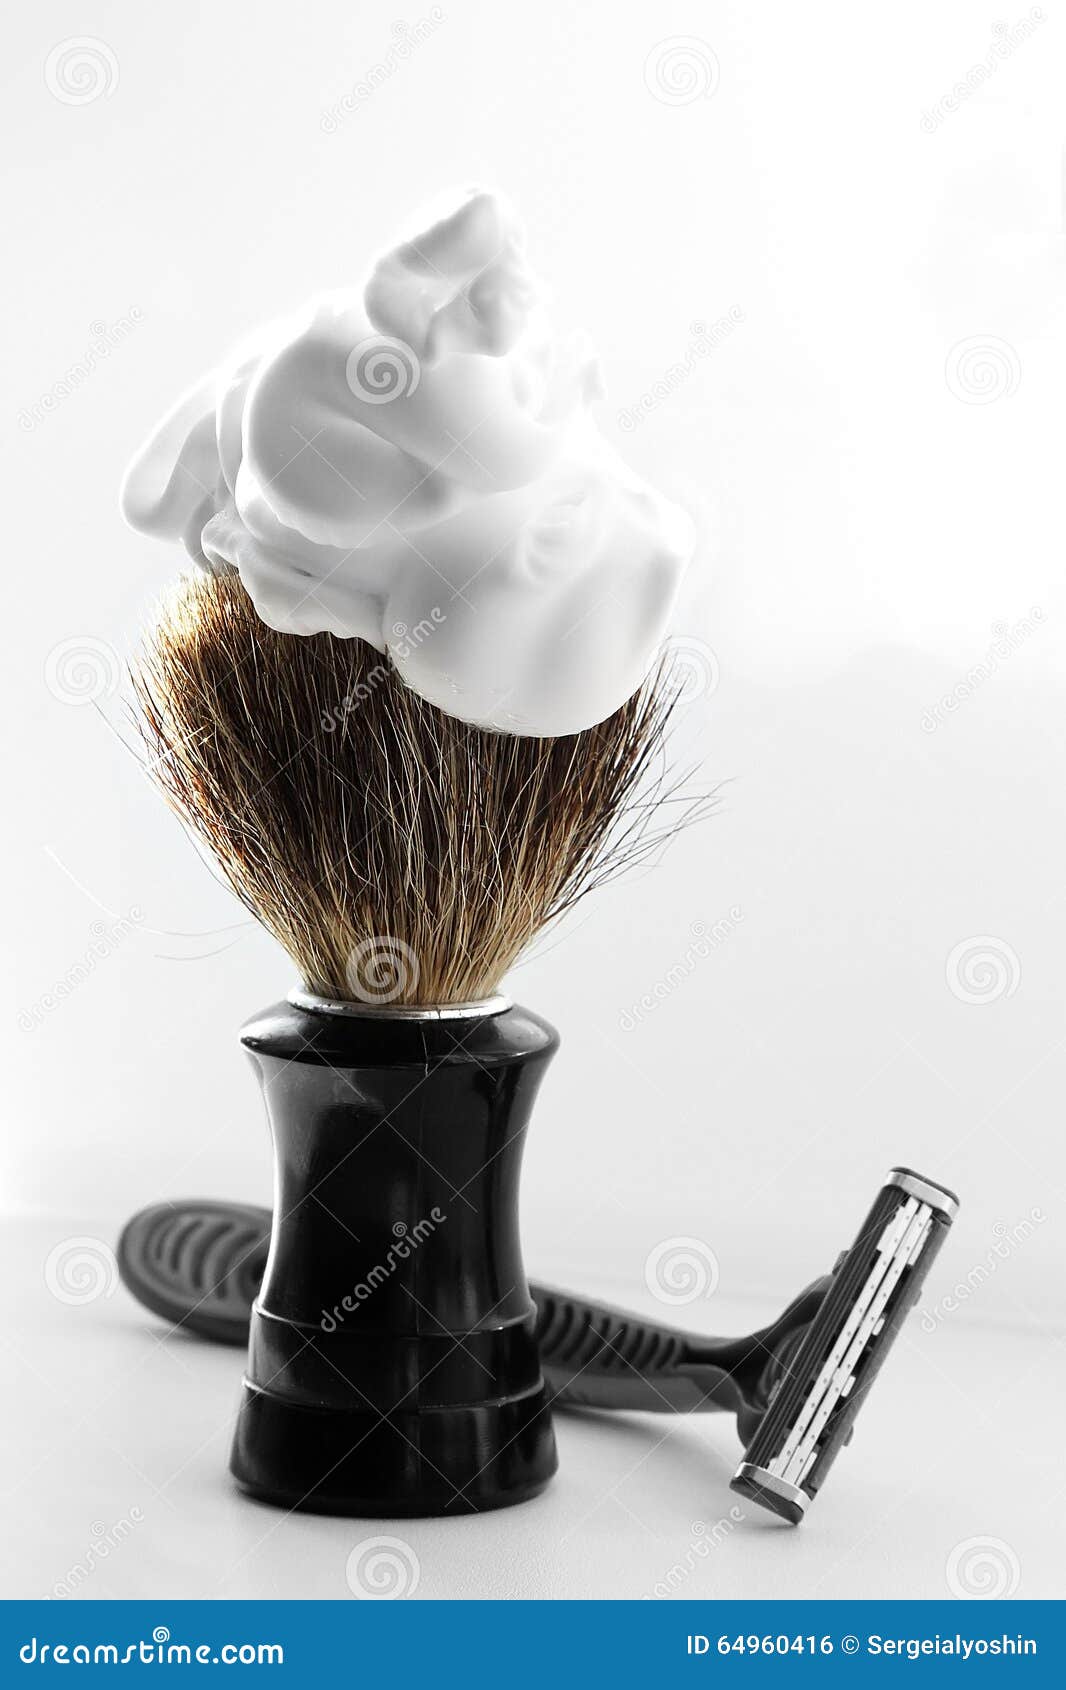 shaving brush with foam on white background